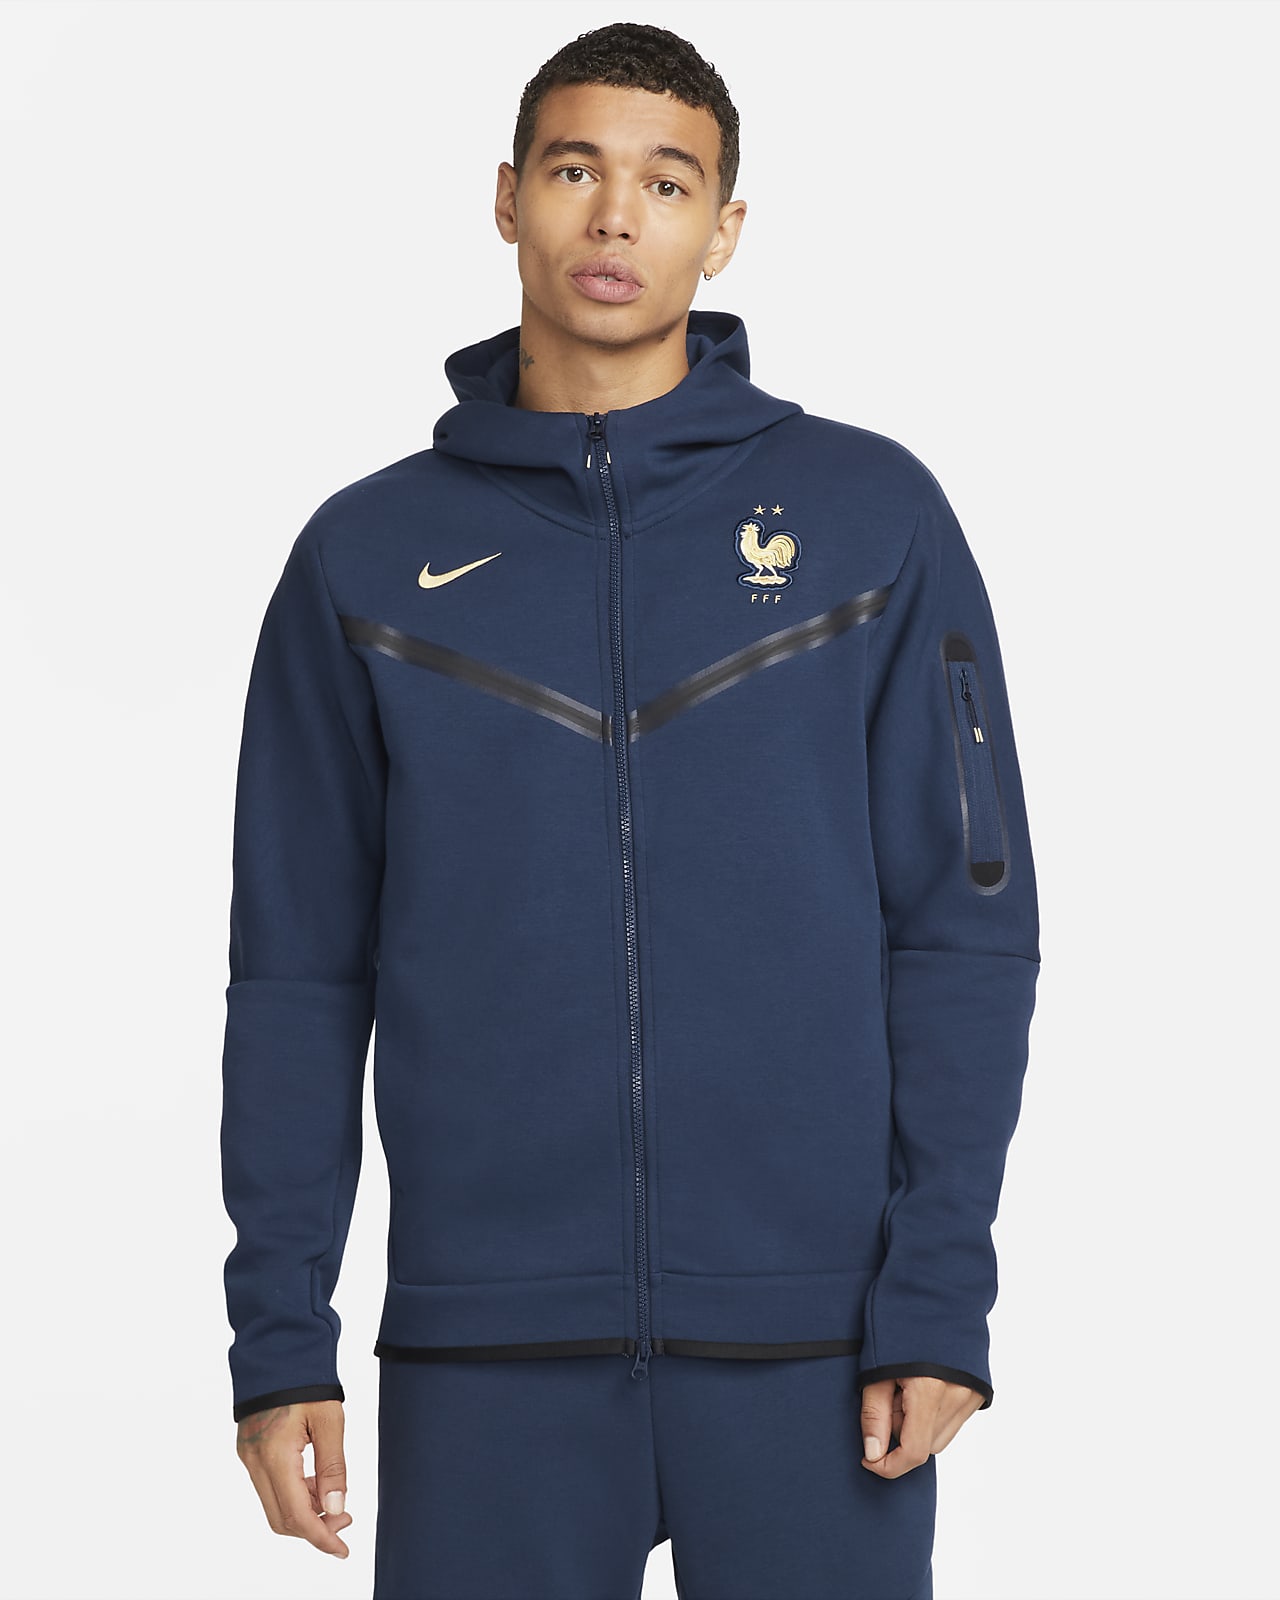 France Men's Nike Full-Zip Tech Fleece